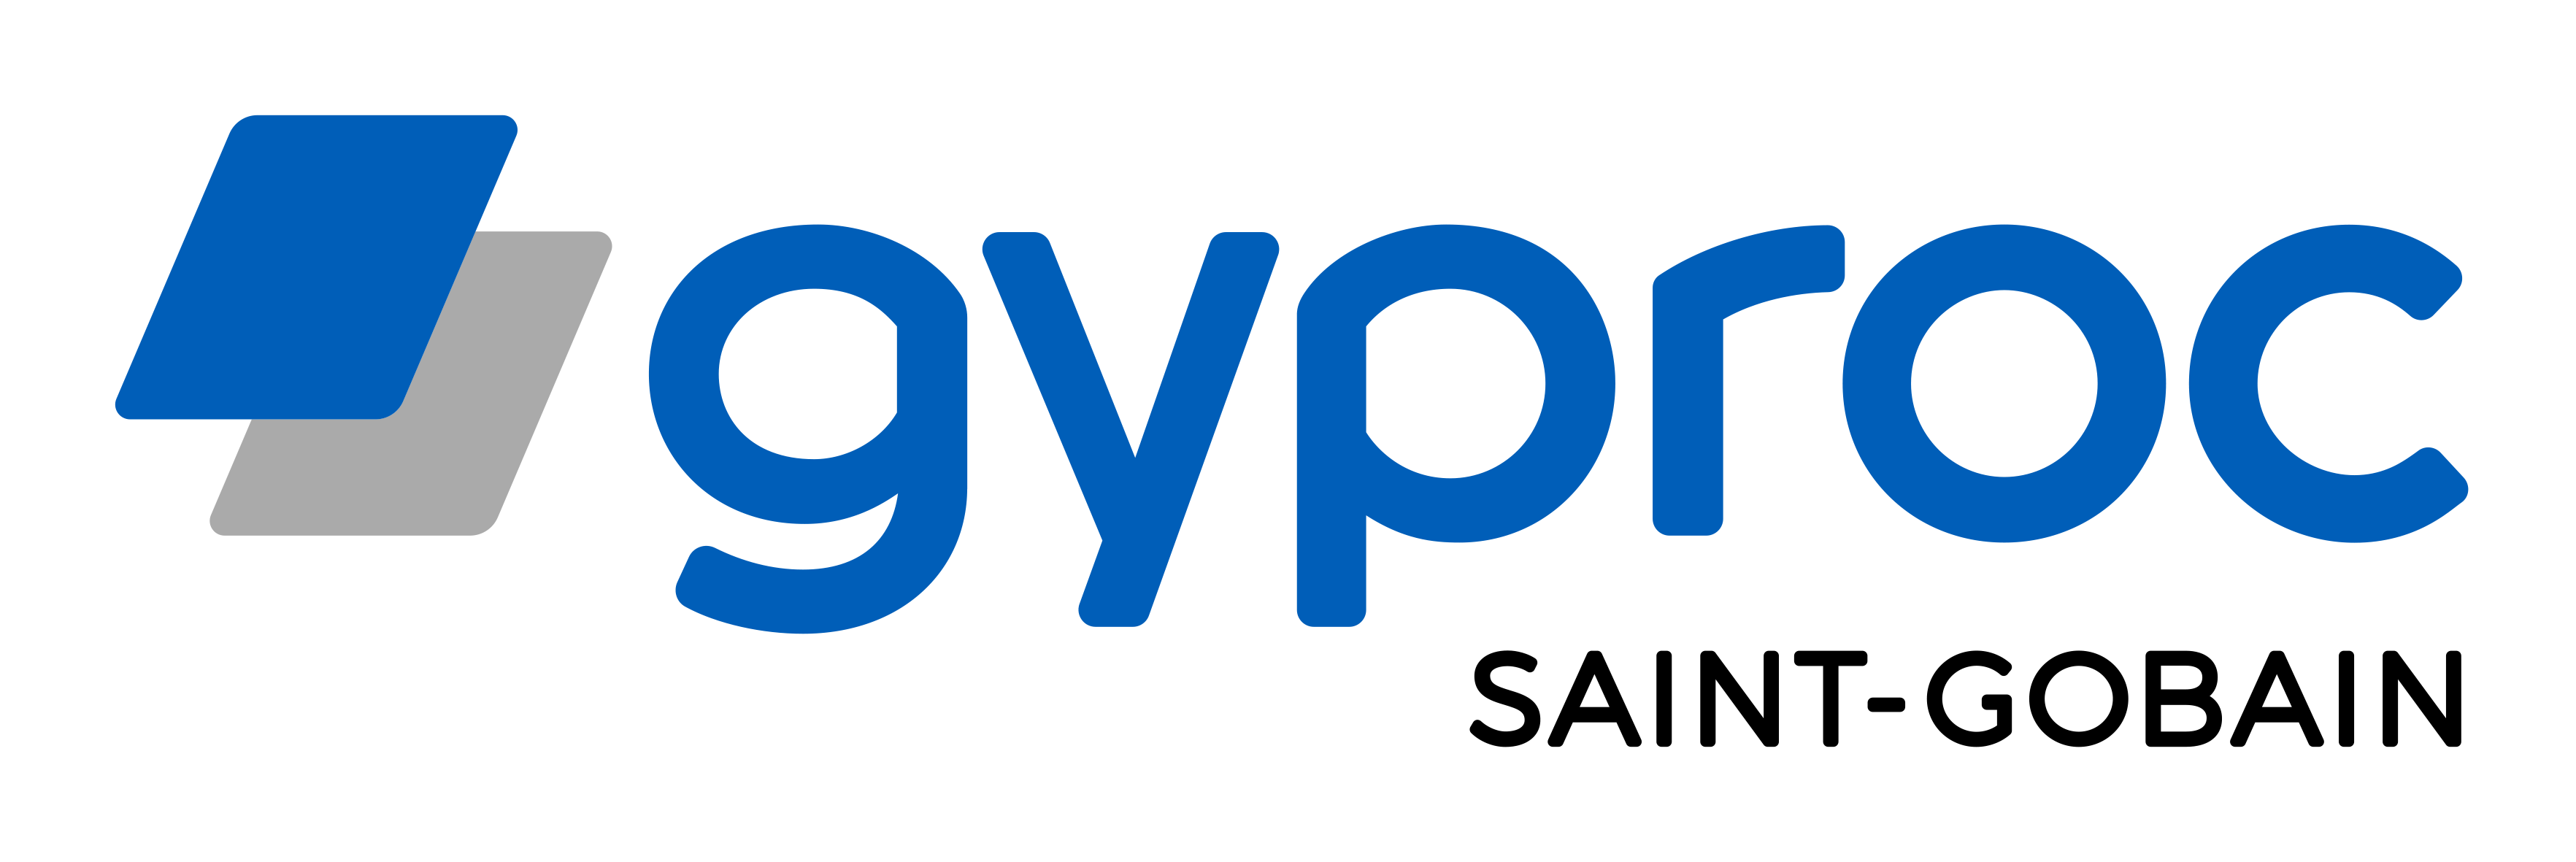 Gyproc_Logotype_rgb.png